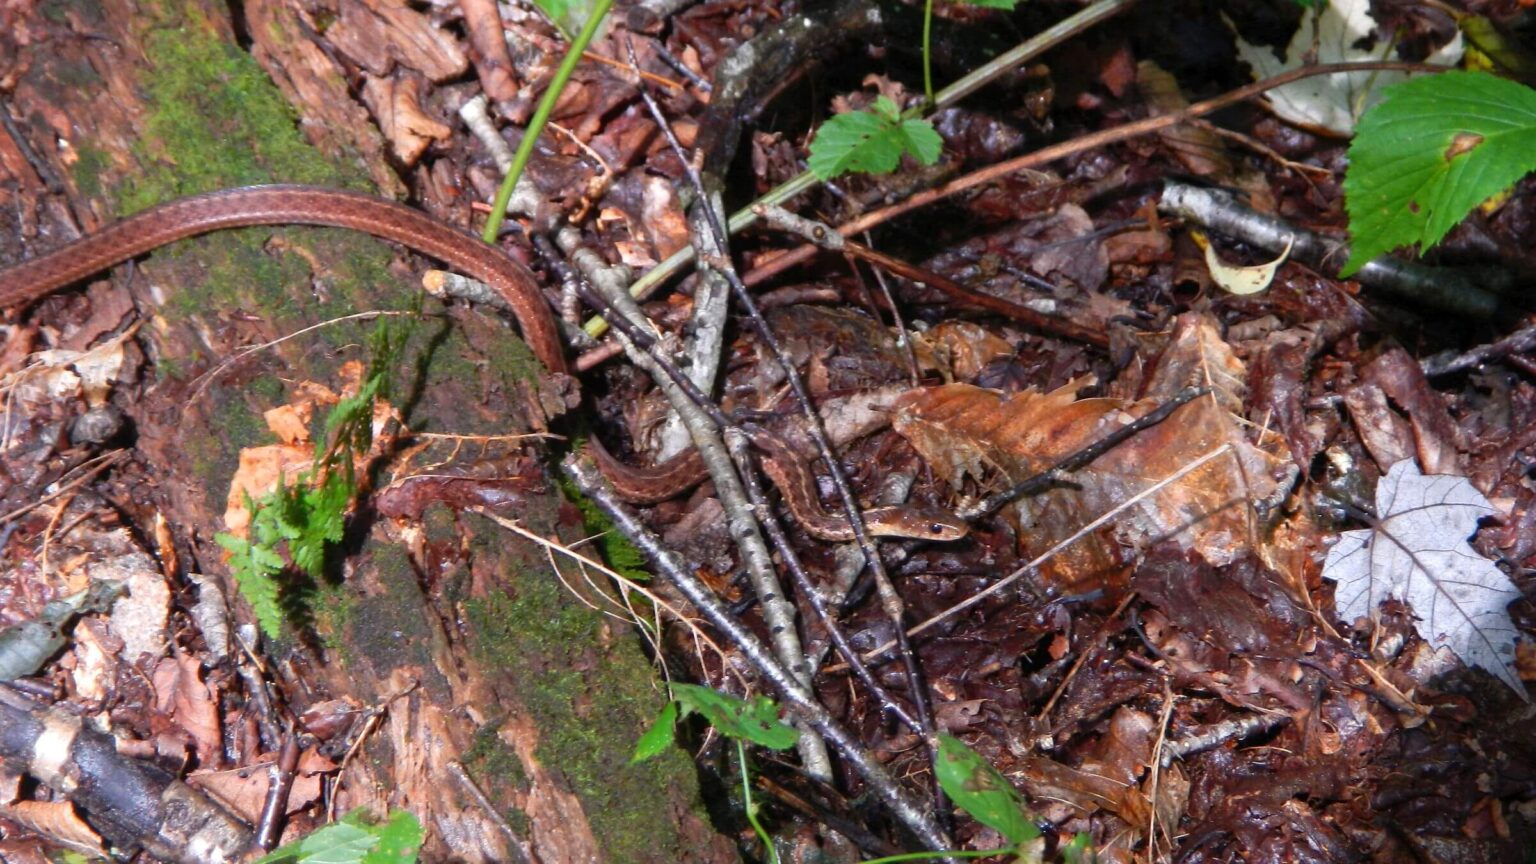 Cranberry Wilderness, probably brown snake (Storeria dekayi), August